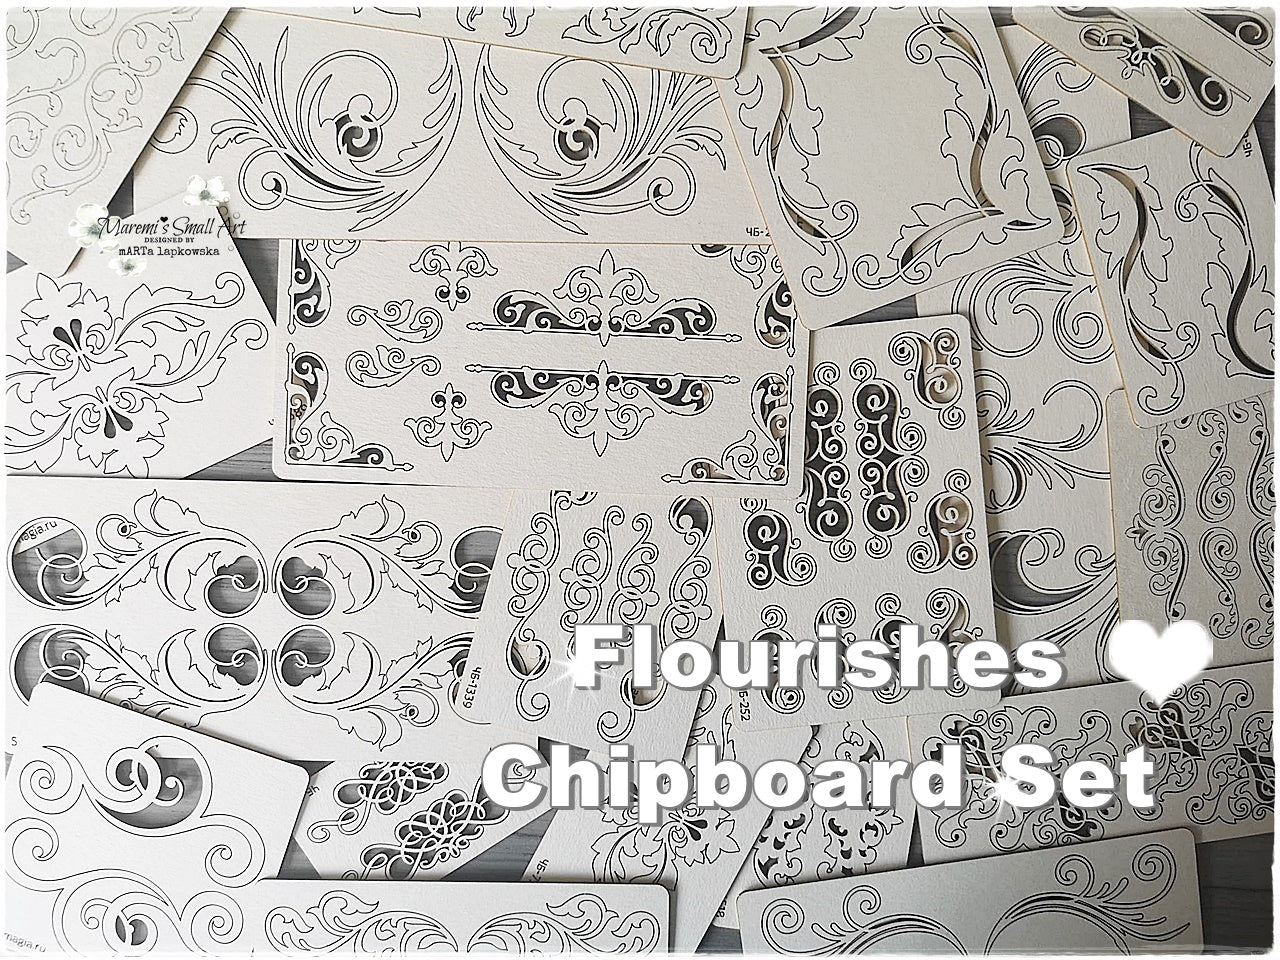 5 Pieces of beautiful random Flourishes Chipboard Set